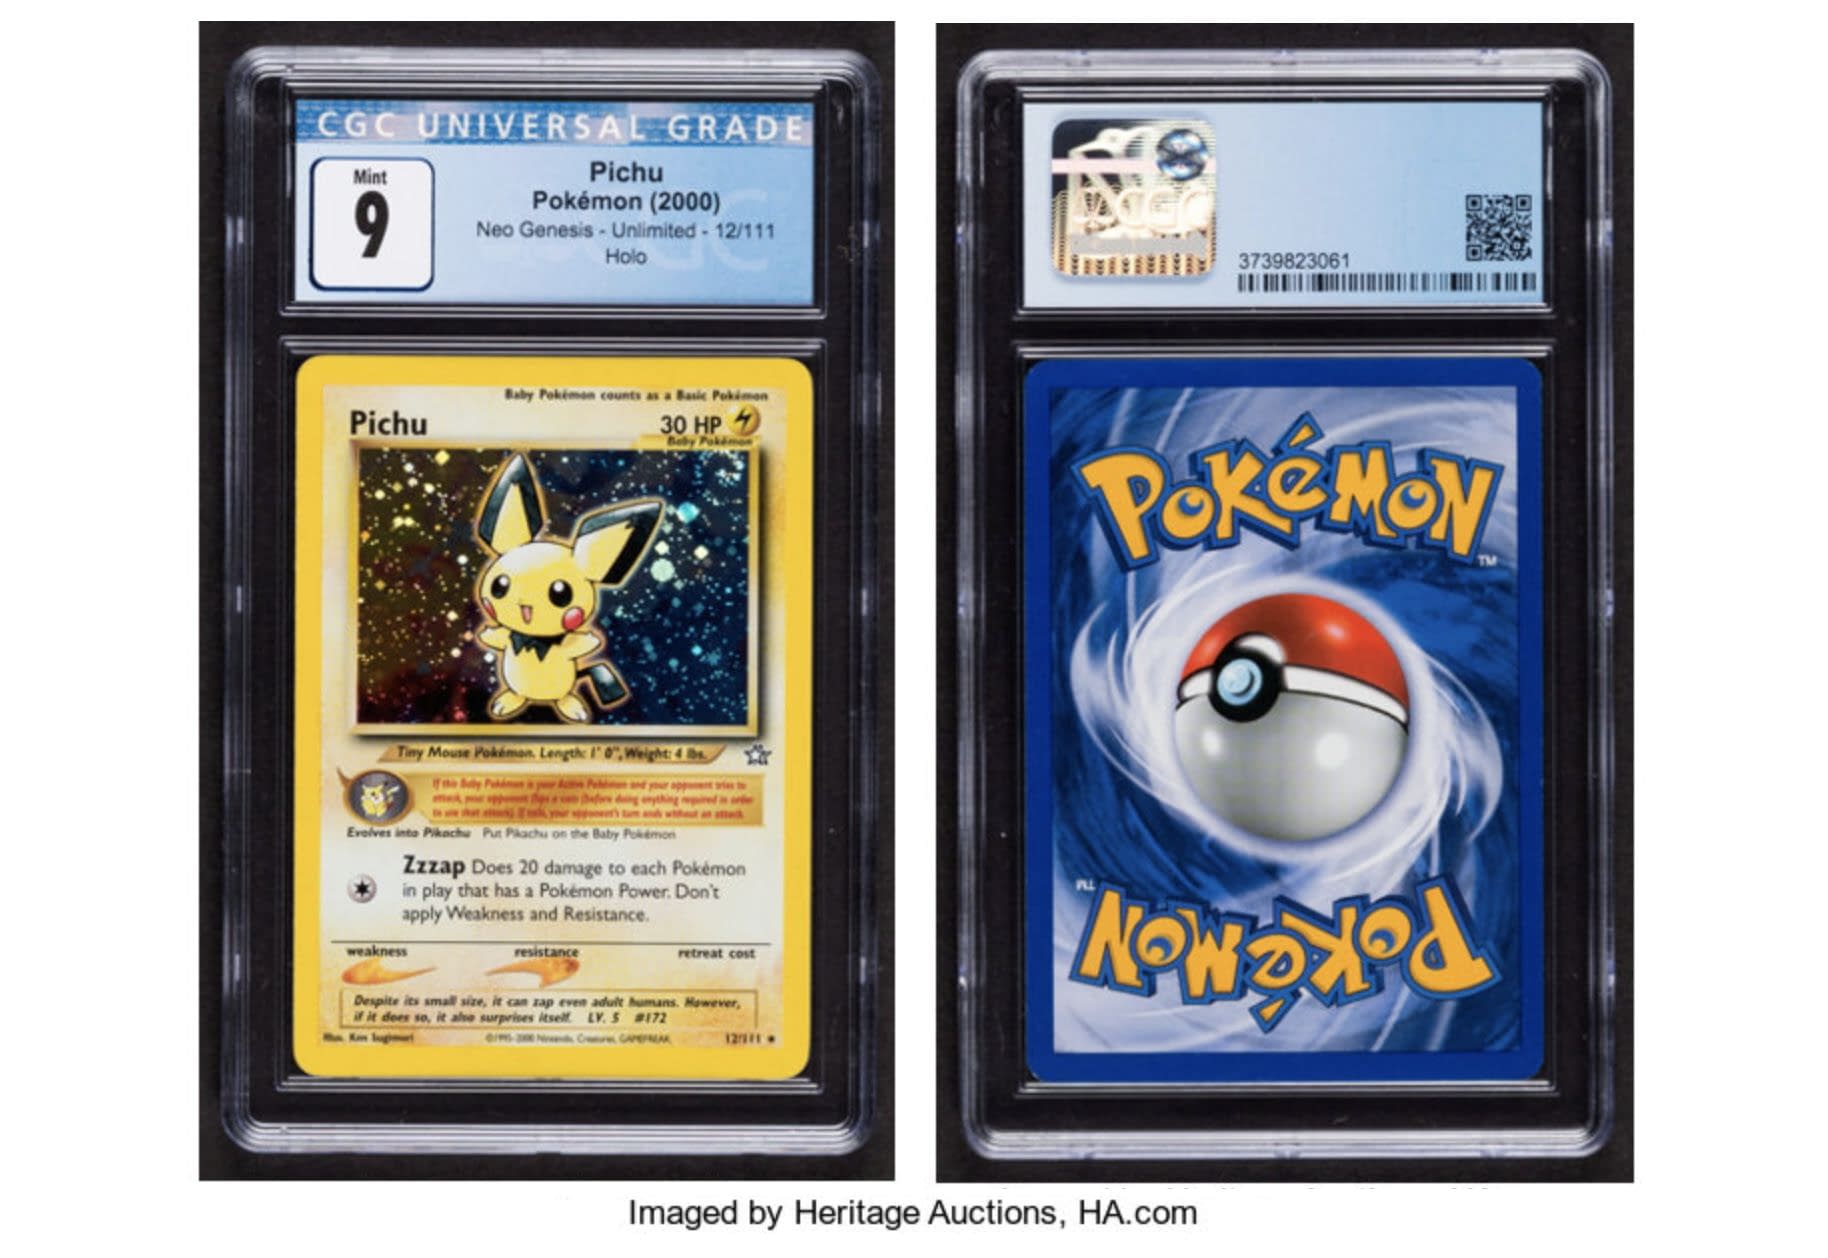 pokemon jigglypuff evolution cards